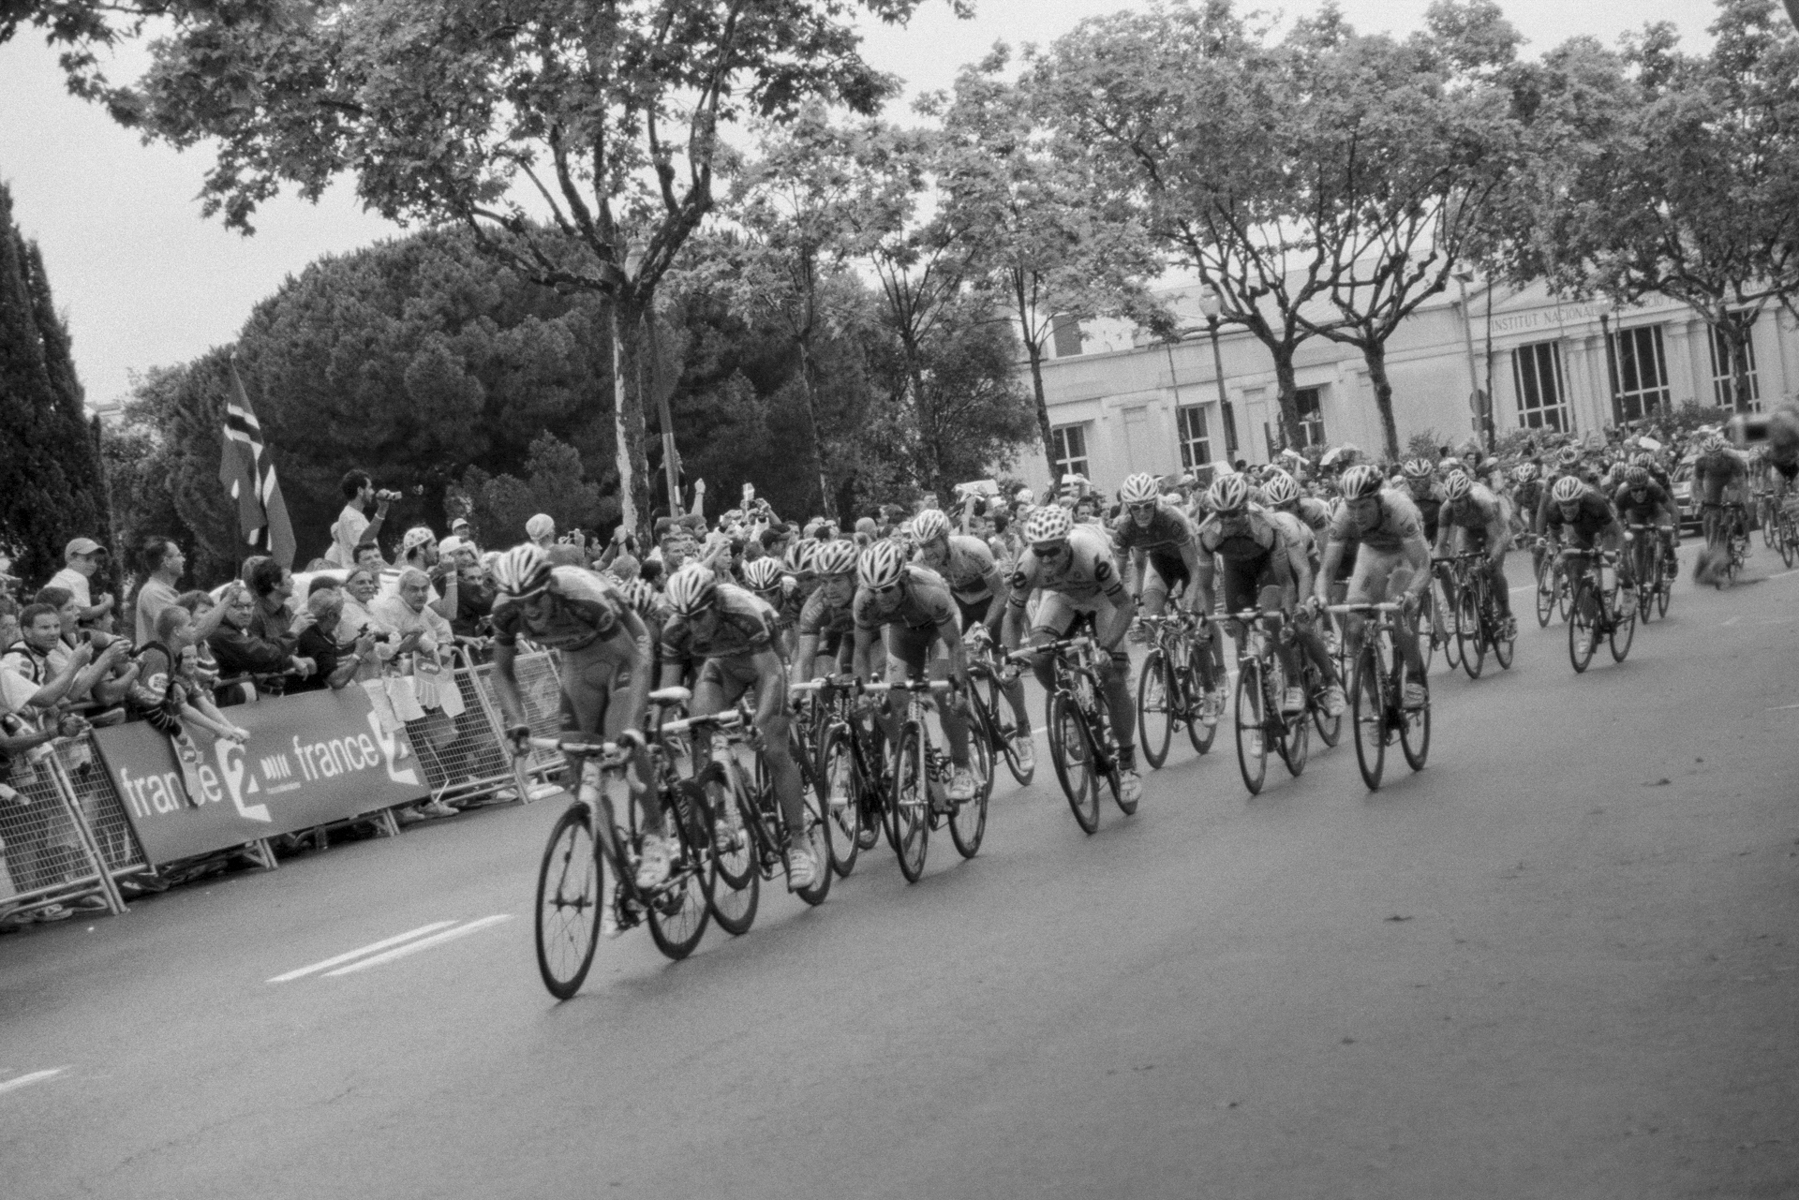 Le Tour de France 2009 Arrival after 181.5 km of cycling from Girona to Barcelona. Arrivée à Barcelone après 181,5 km de course depuis Girone. Ankunft nach 181,5 km Radrennen: von Girona nach Barcelona. Llegada después de 181,5 km: de Girona a Barcelona.